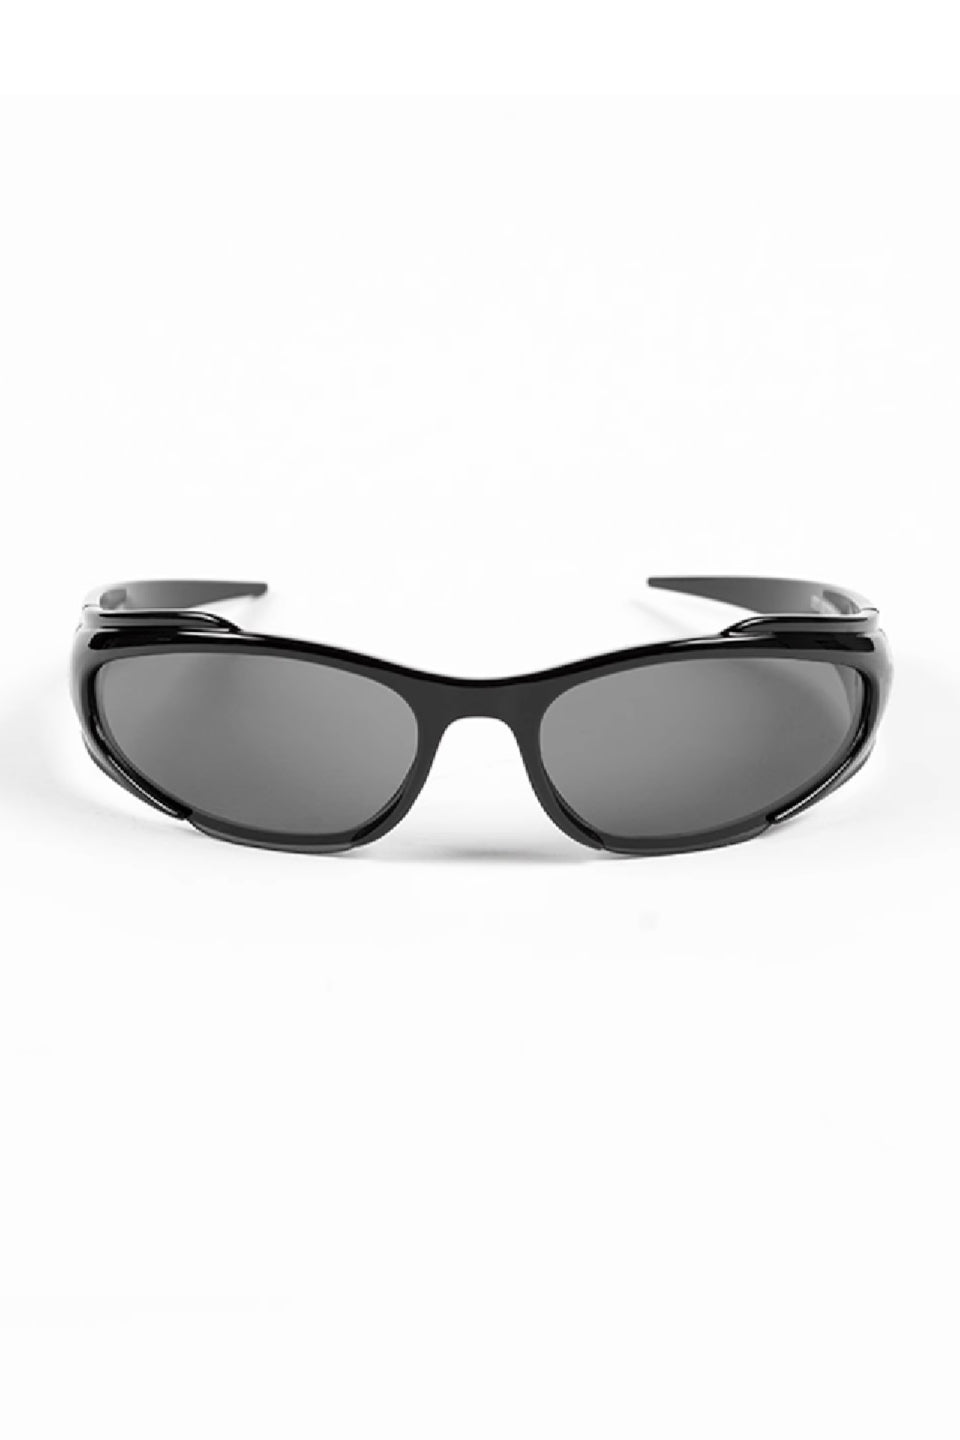 RCKST Oval Sunglasses